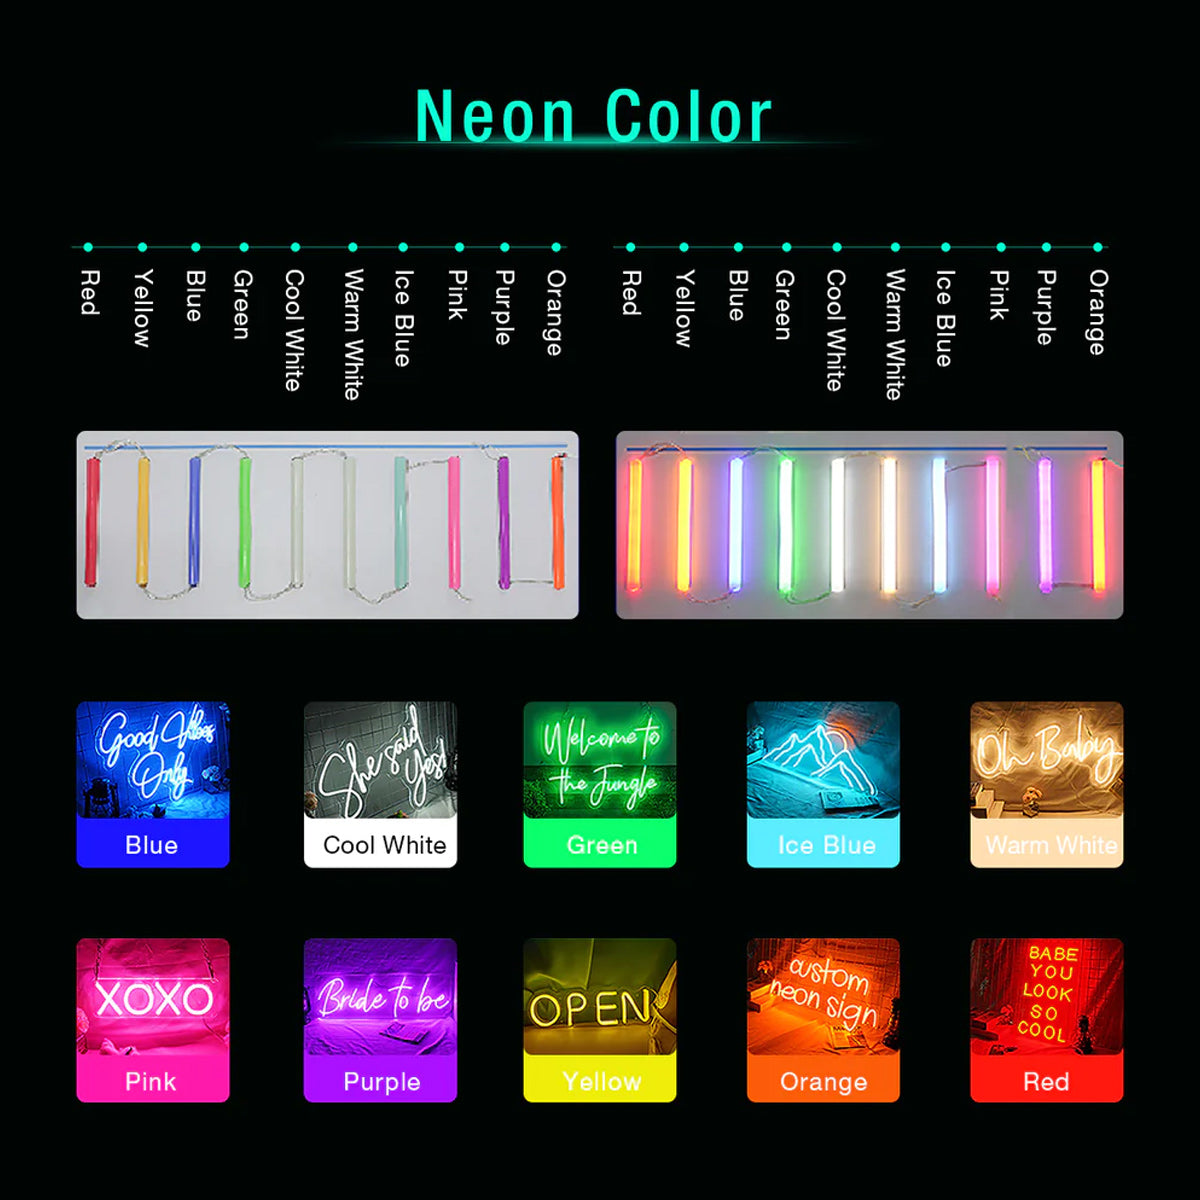 NEONIP-Personalized 100% Handmade Butterfly Mirror Neon Light